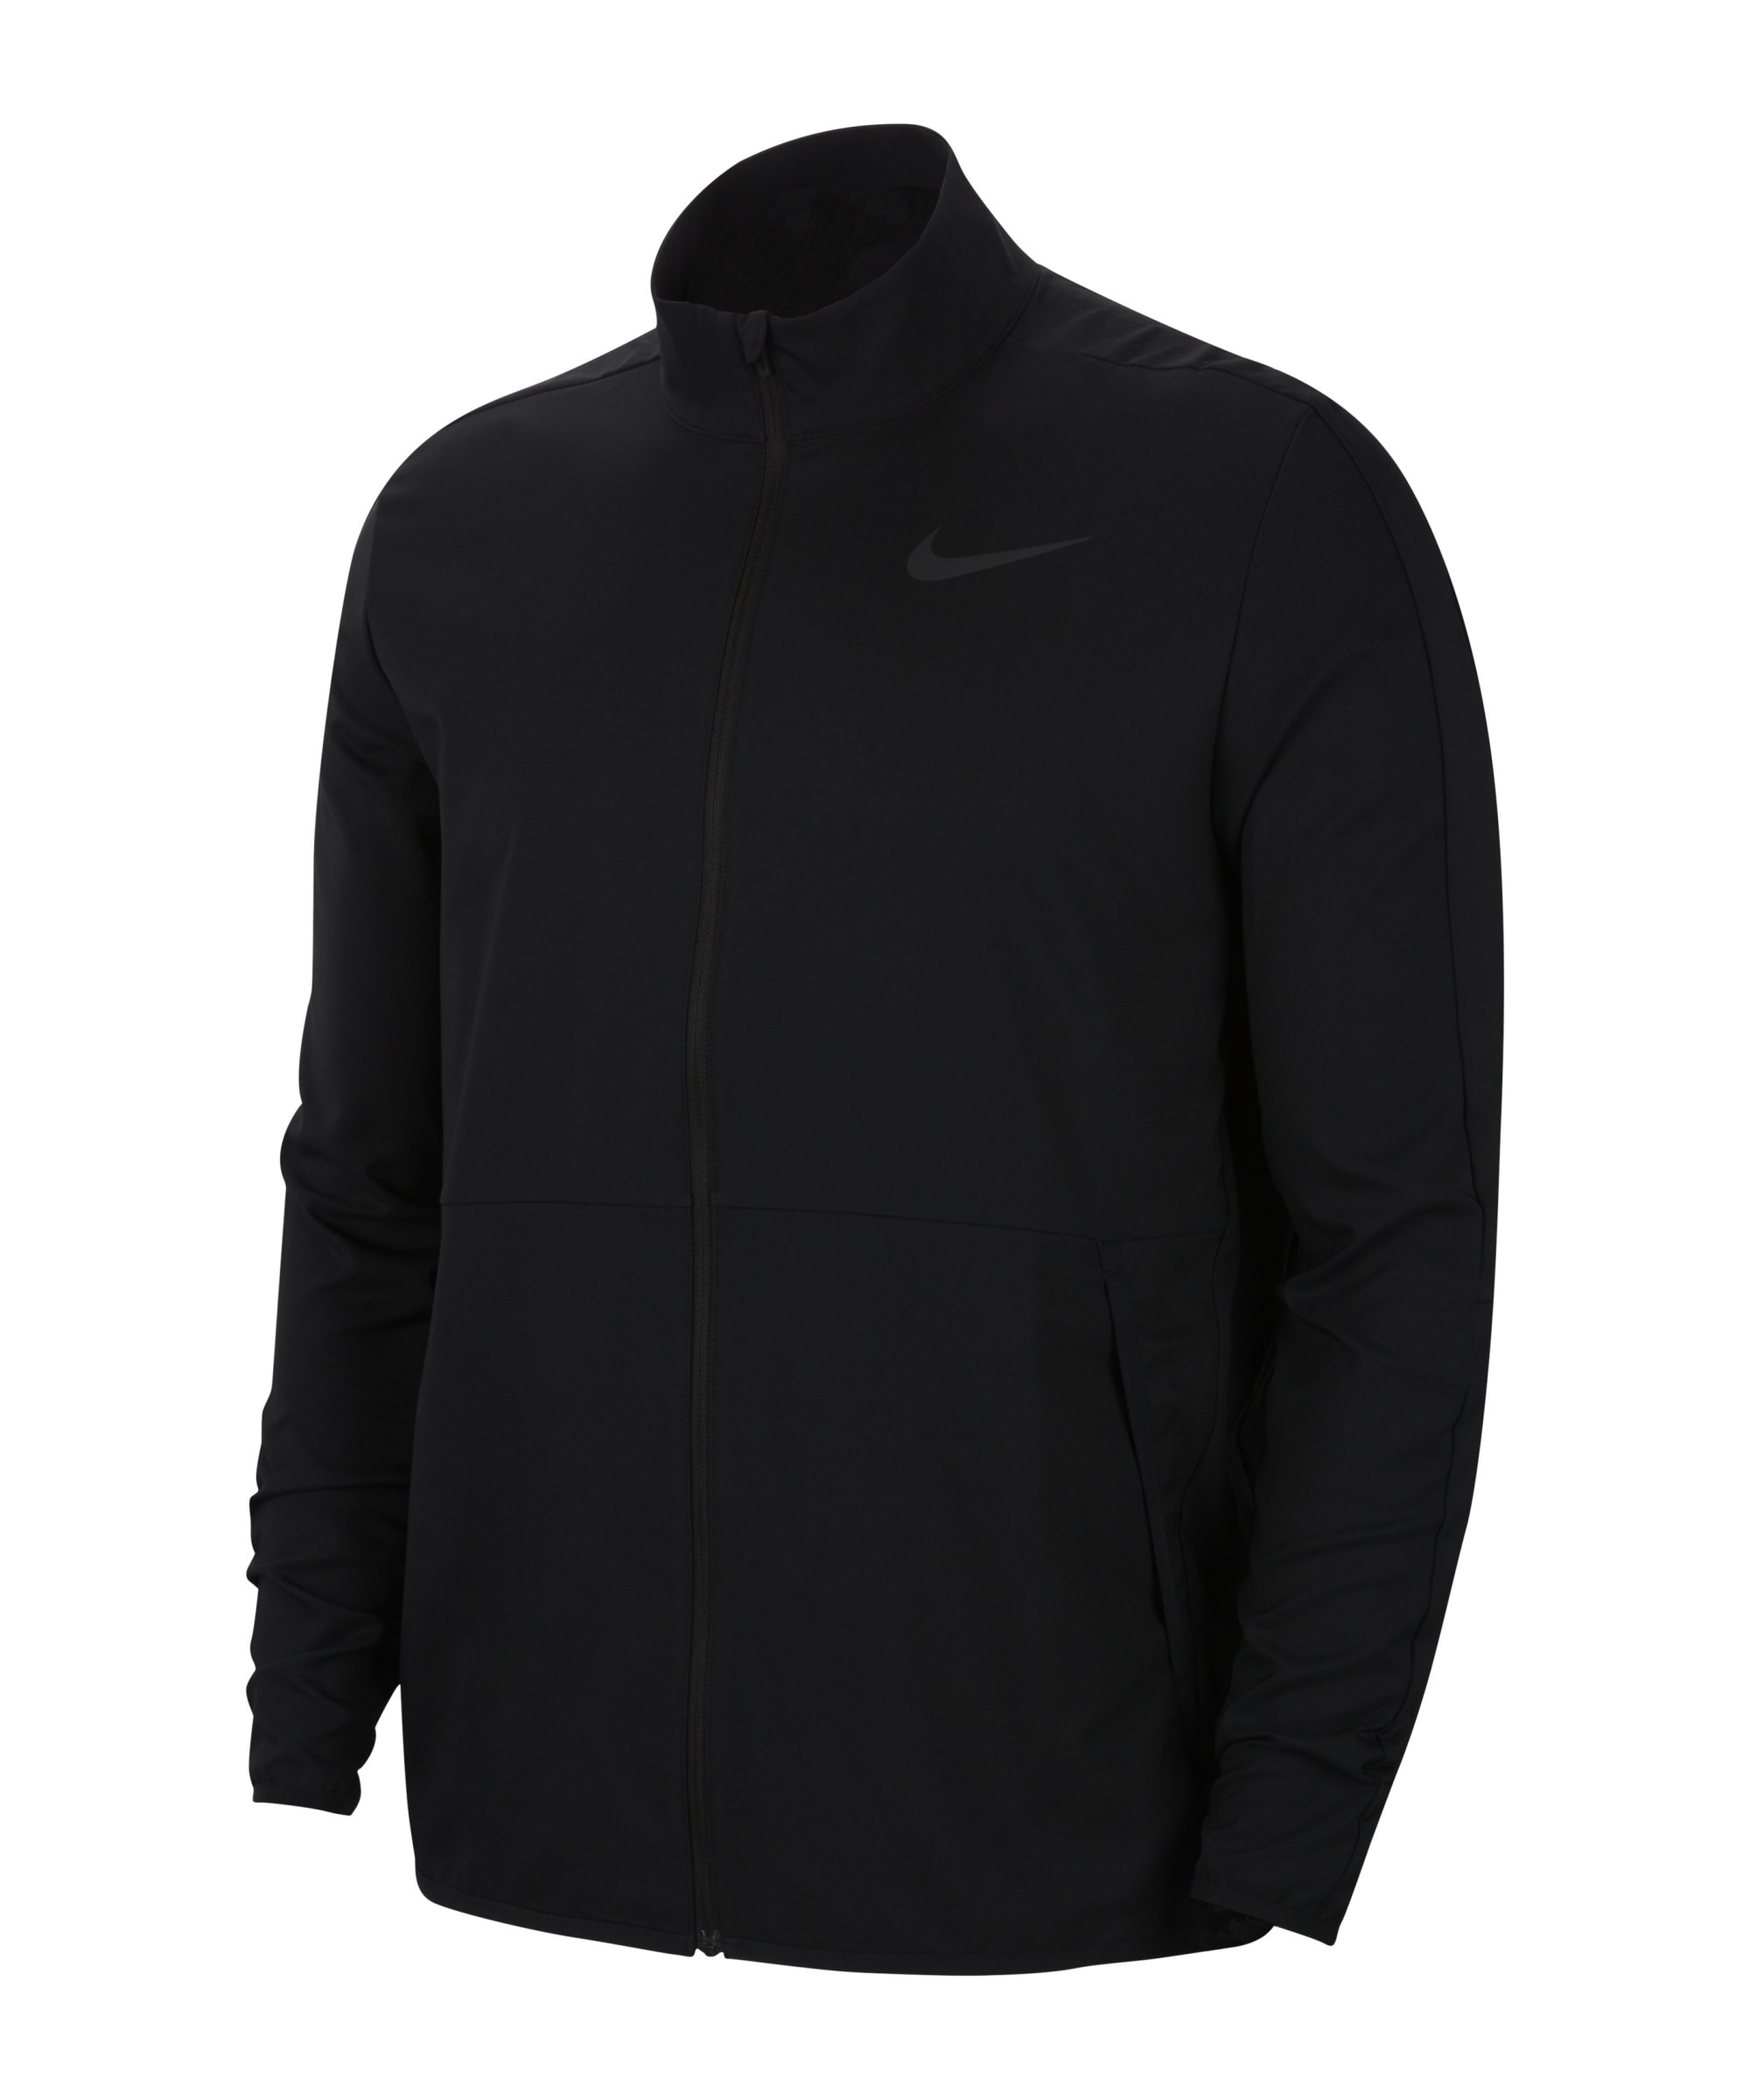 Nike Dri-FIT Woven Jacke Tall Schwarz F010 - schwarz